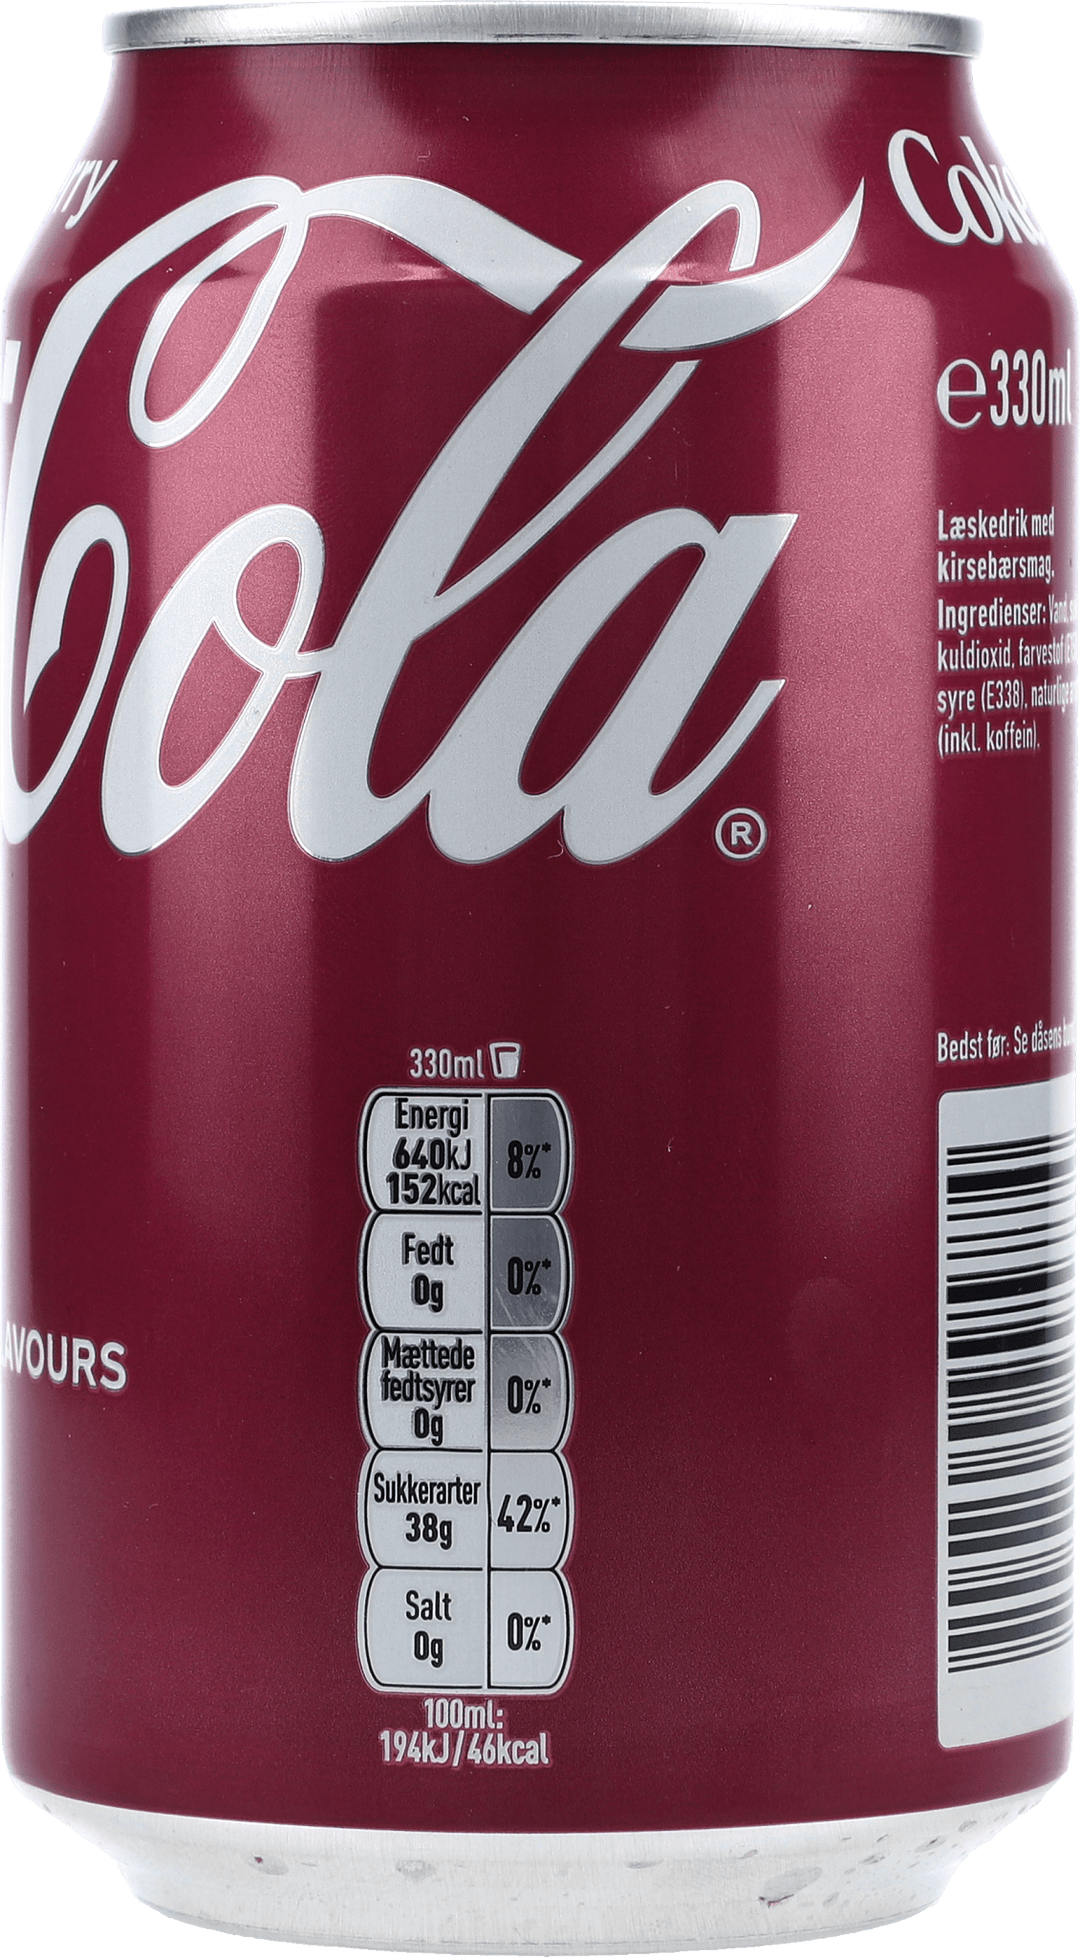 Coca Cola Cherry 24x 0,33 ltr. zzgl. DPG Pfand - AllSpirits